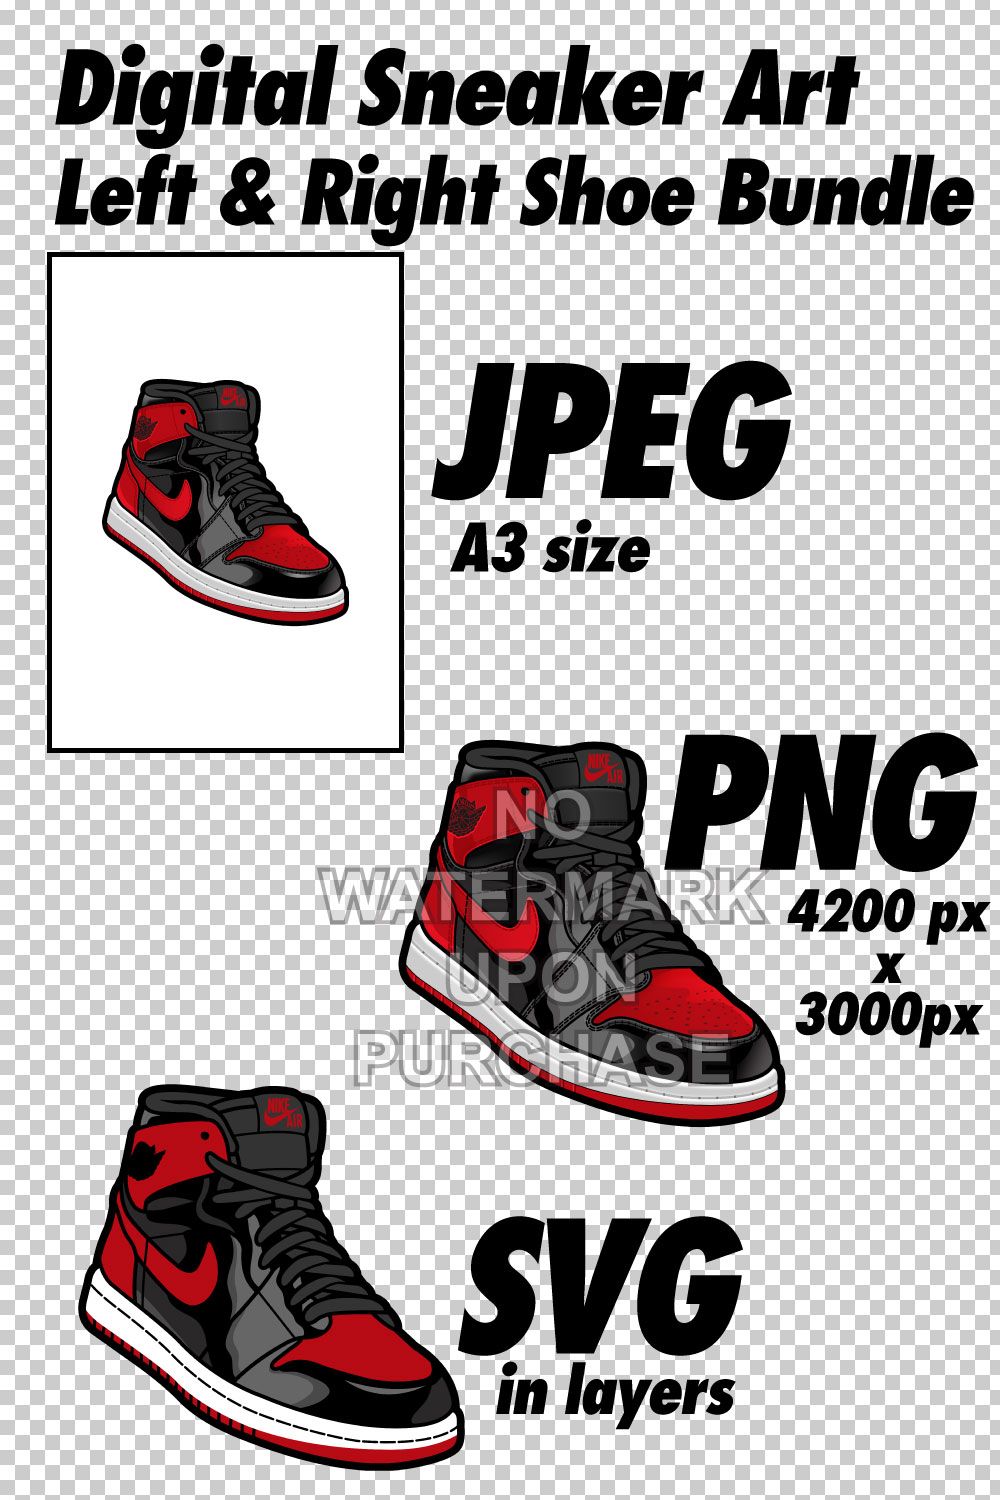 Air Jordan 1 Patent Bred JPEG PNG SVG right & left shoe bundle pinterest preview image.